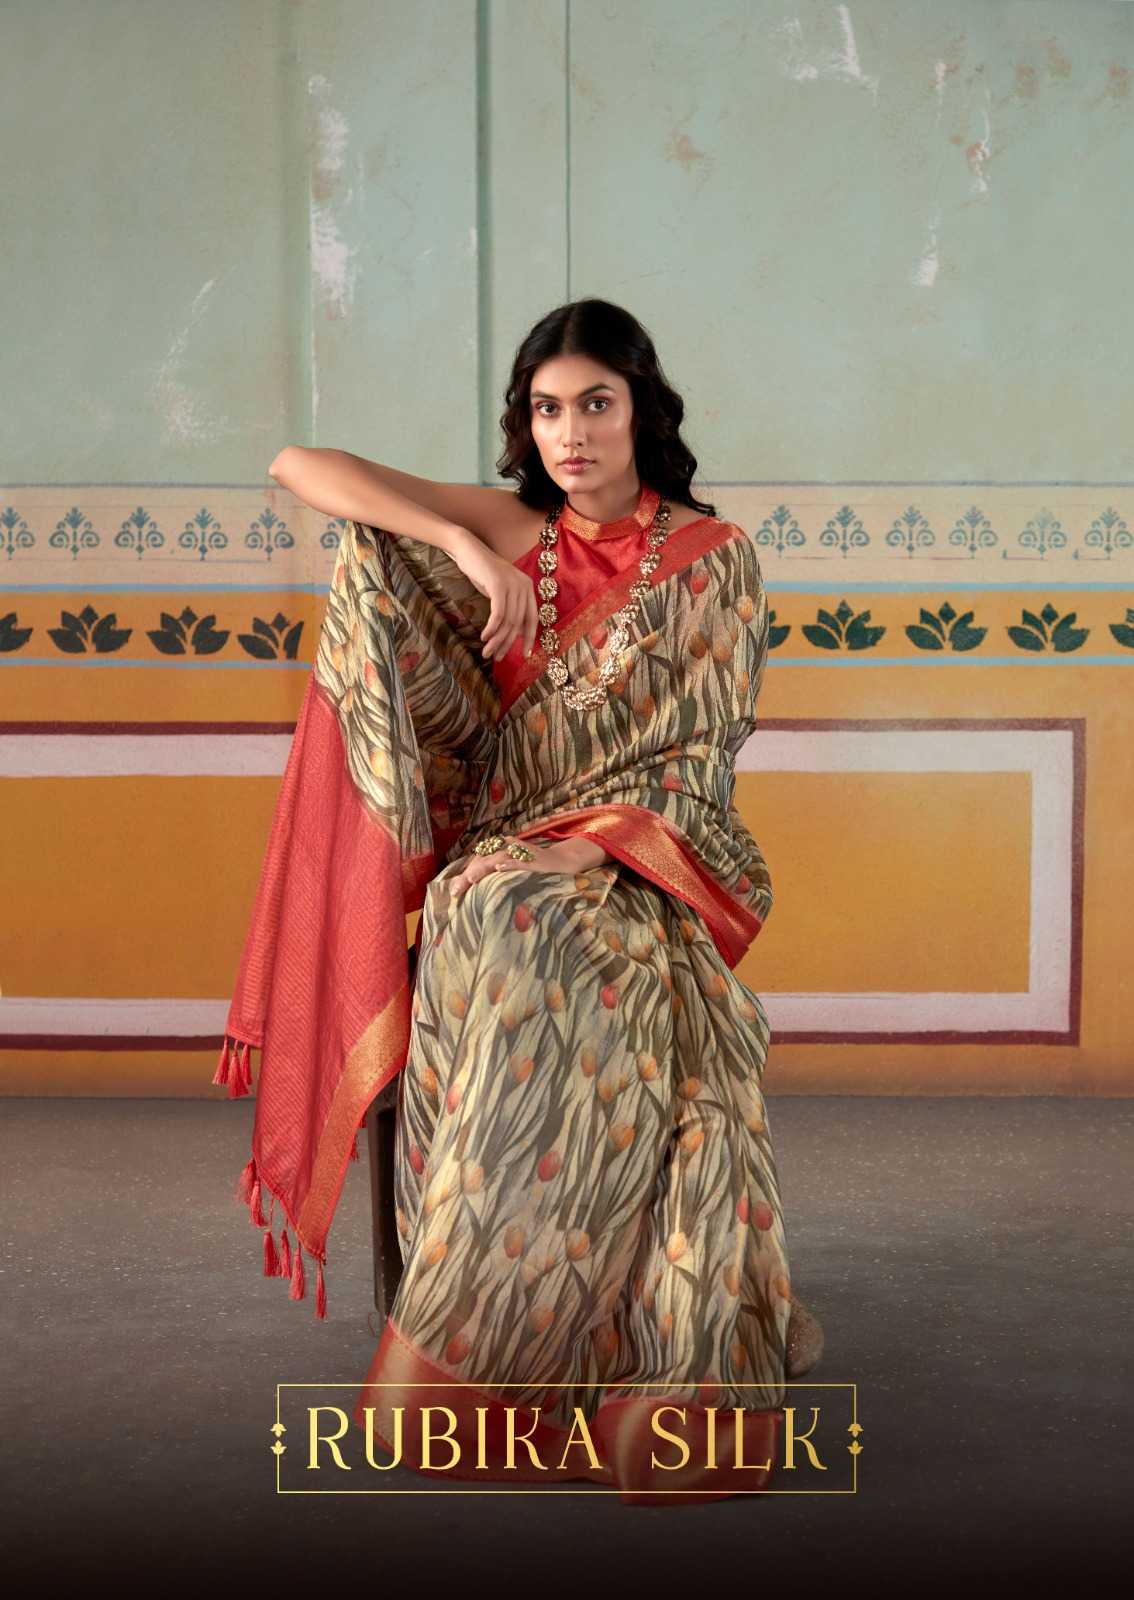 rajpath rubika silk 310001-310008 series festive wear handloom tissue silk sarees